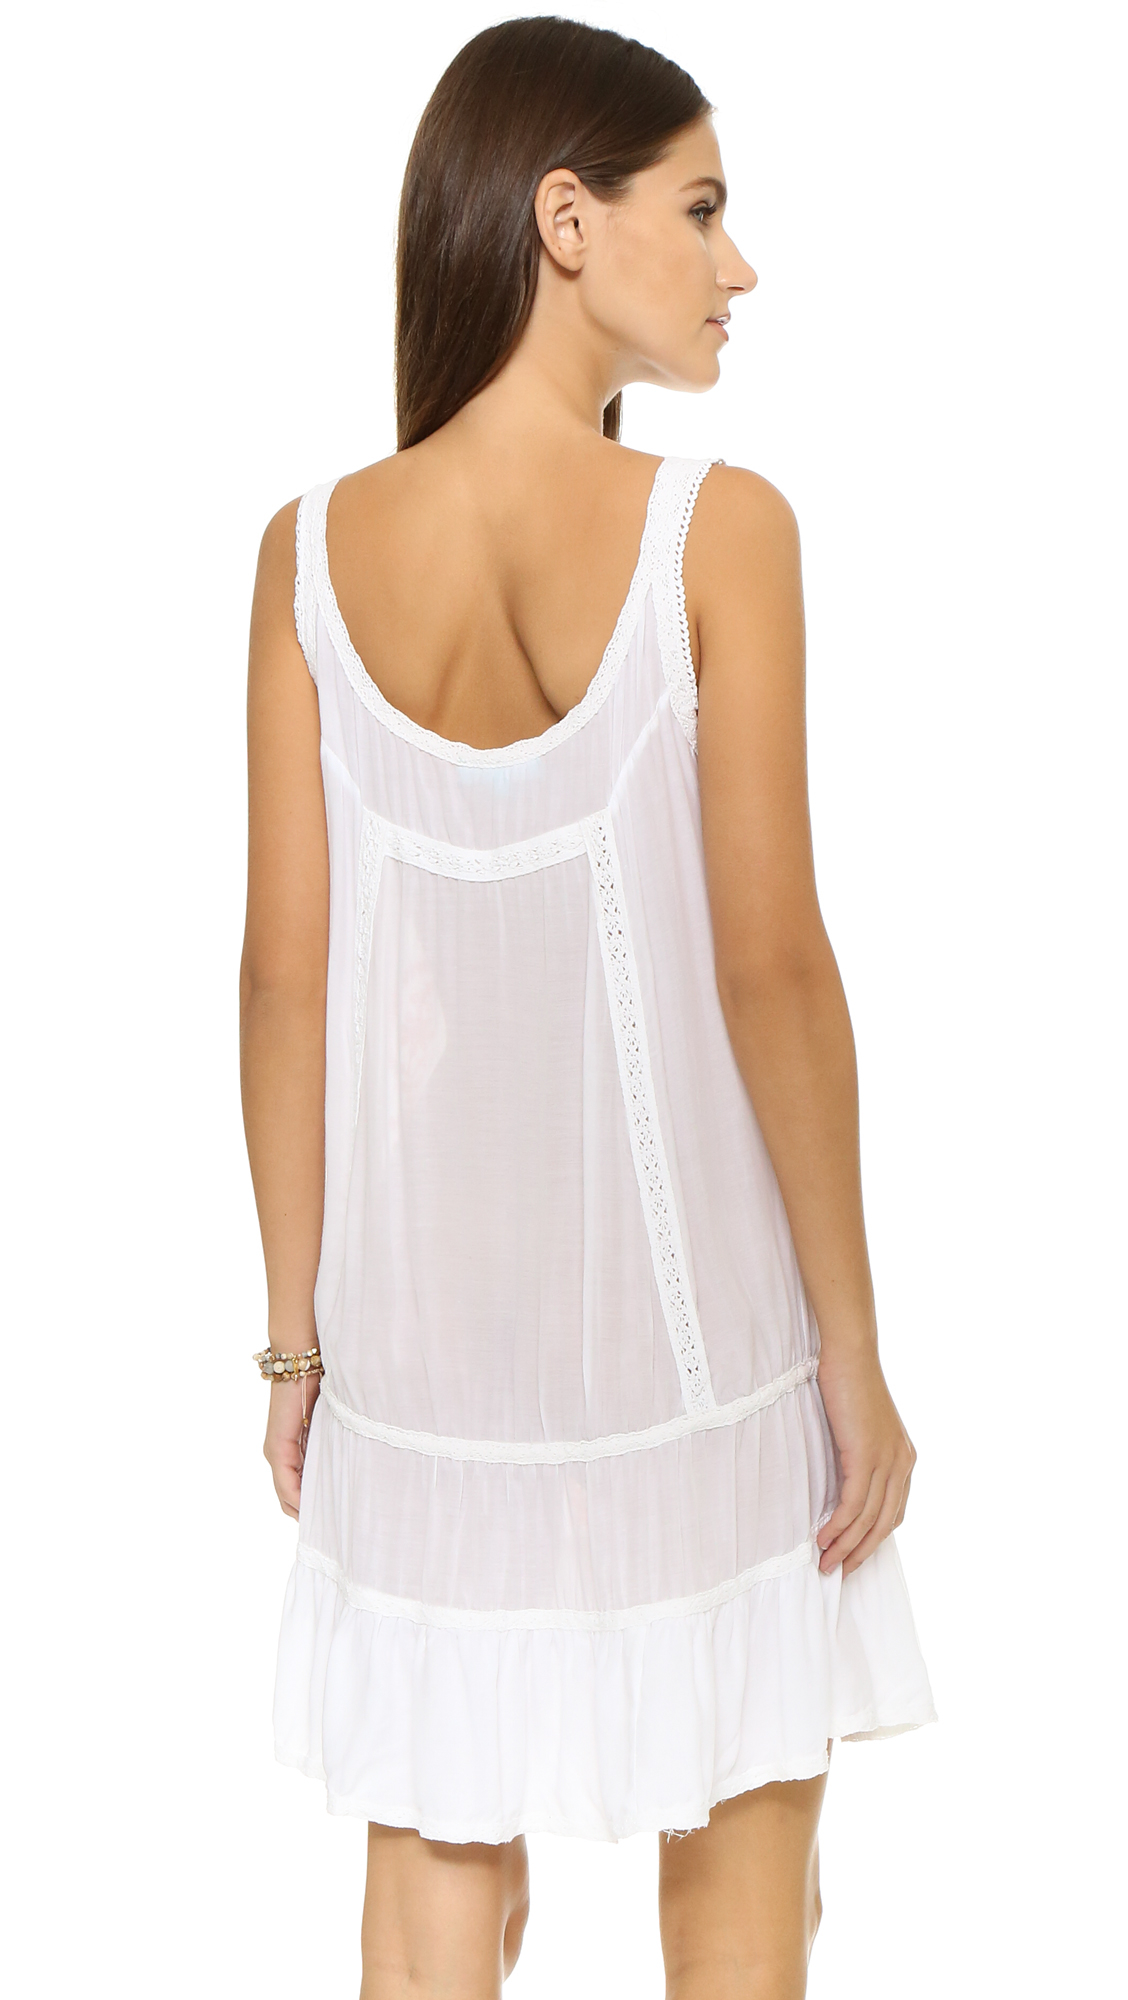 Melissa Odabash Lace Jaz Beach Dress in White/Fluoro (White) - Lyst